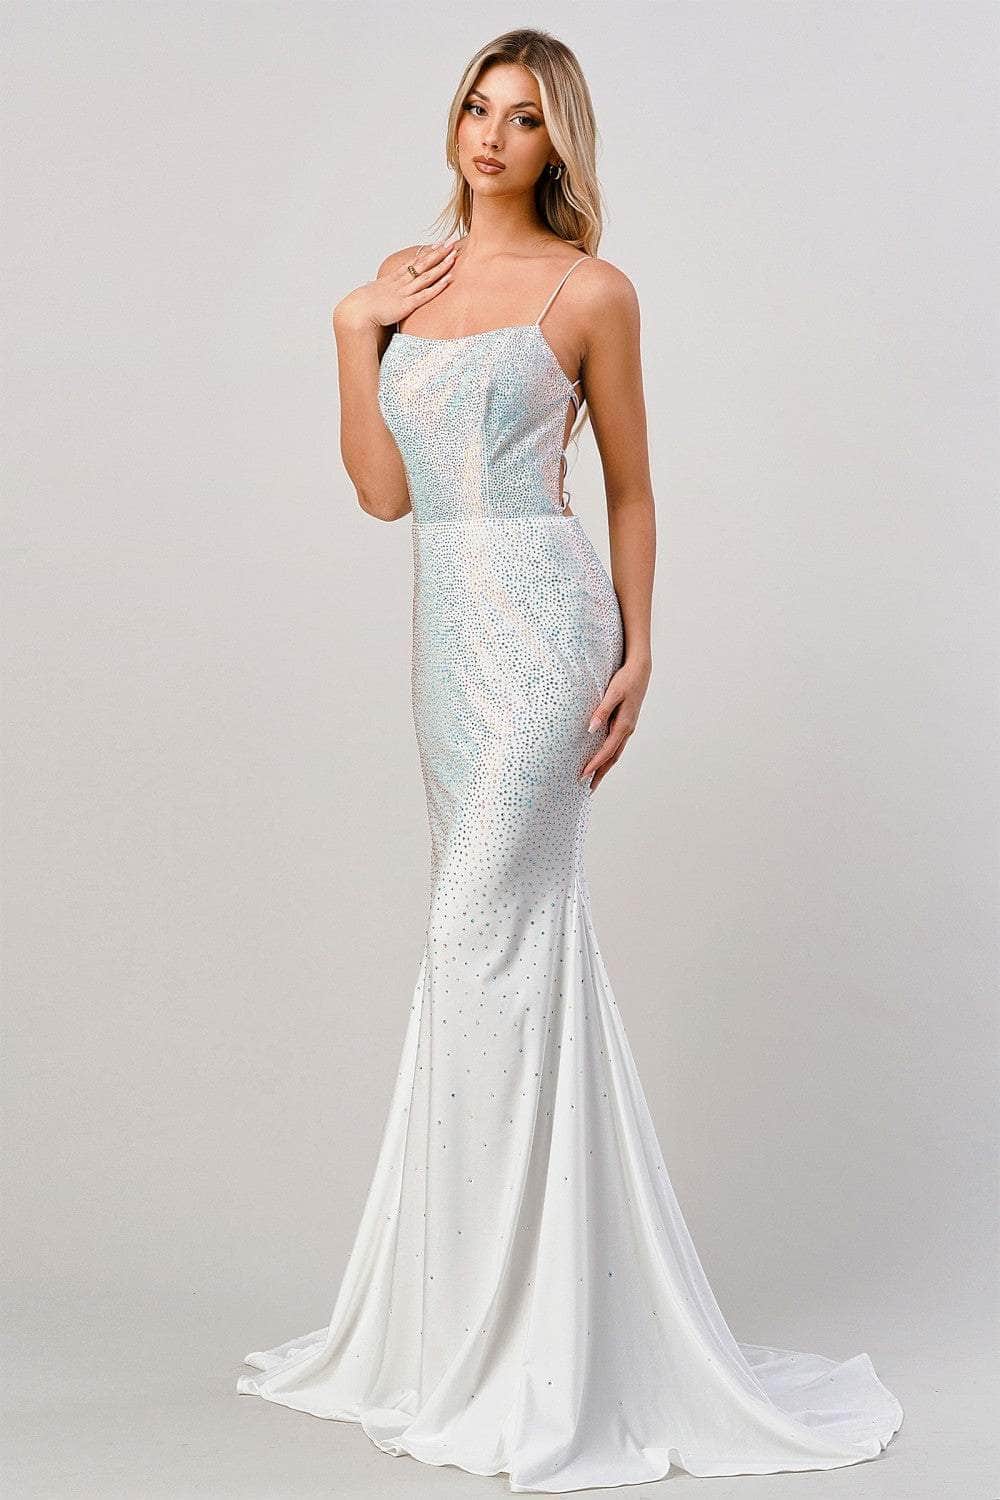 Cinderella Divine - Sequined Mermaid Prom Dress CD0179 - 1 pc White Multi In Size M Available CCSALE M / White Multi